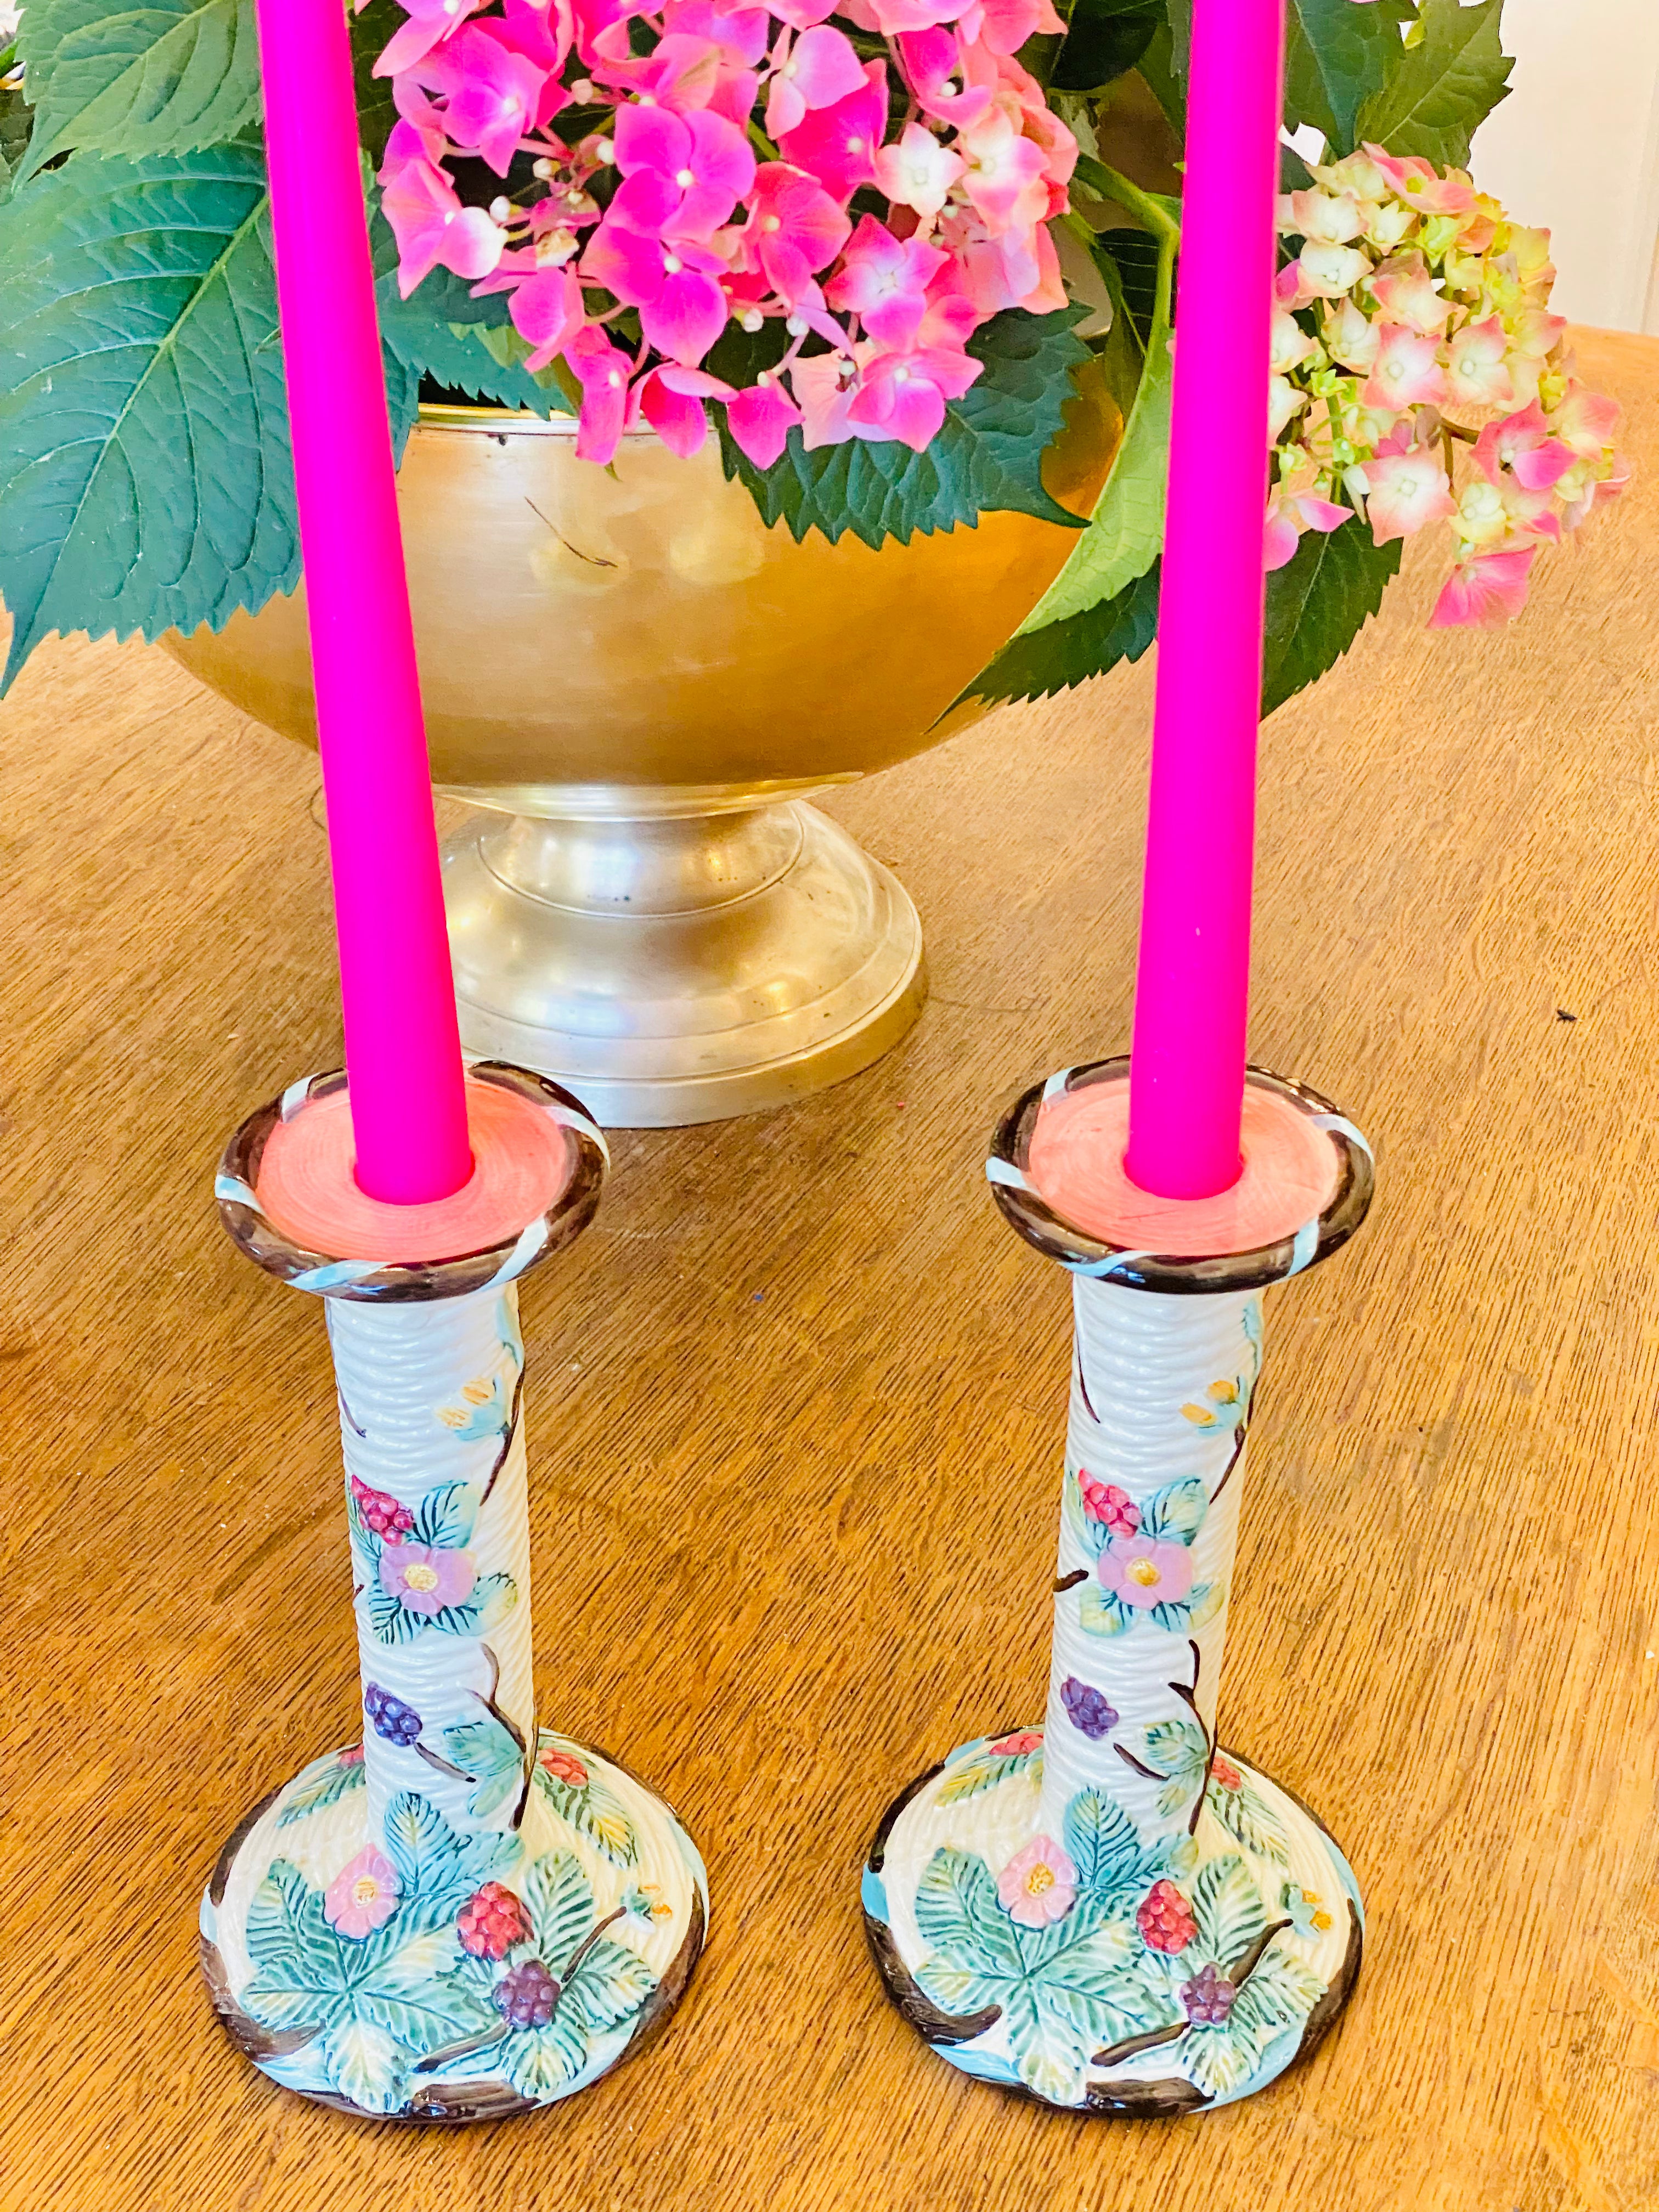 The Haldon Group Wild Berry & Blossoms Candlesticks